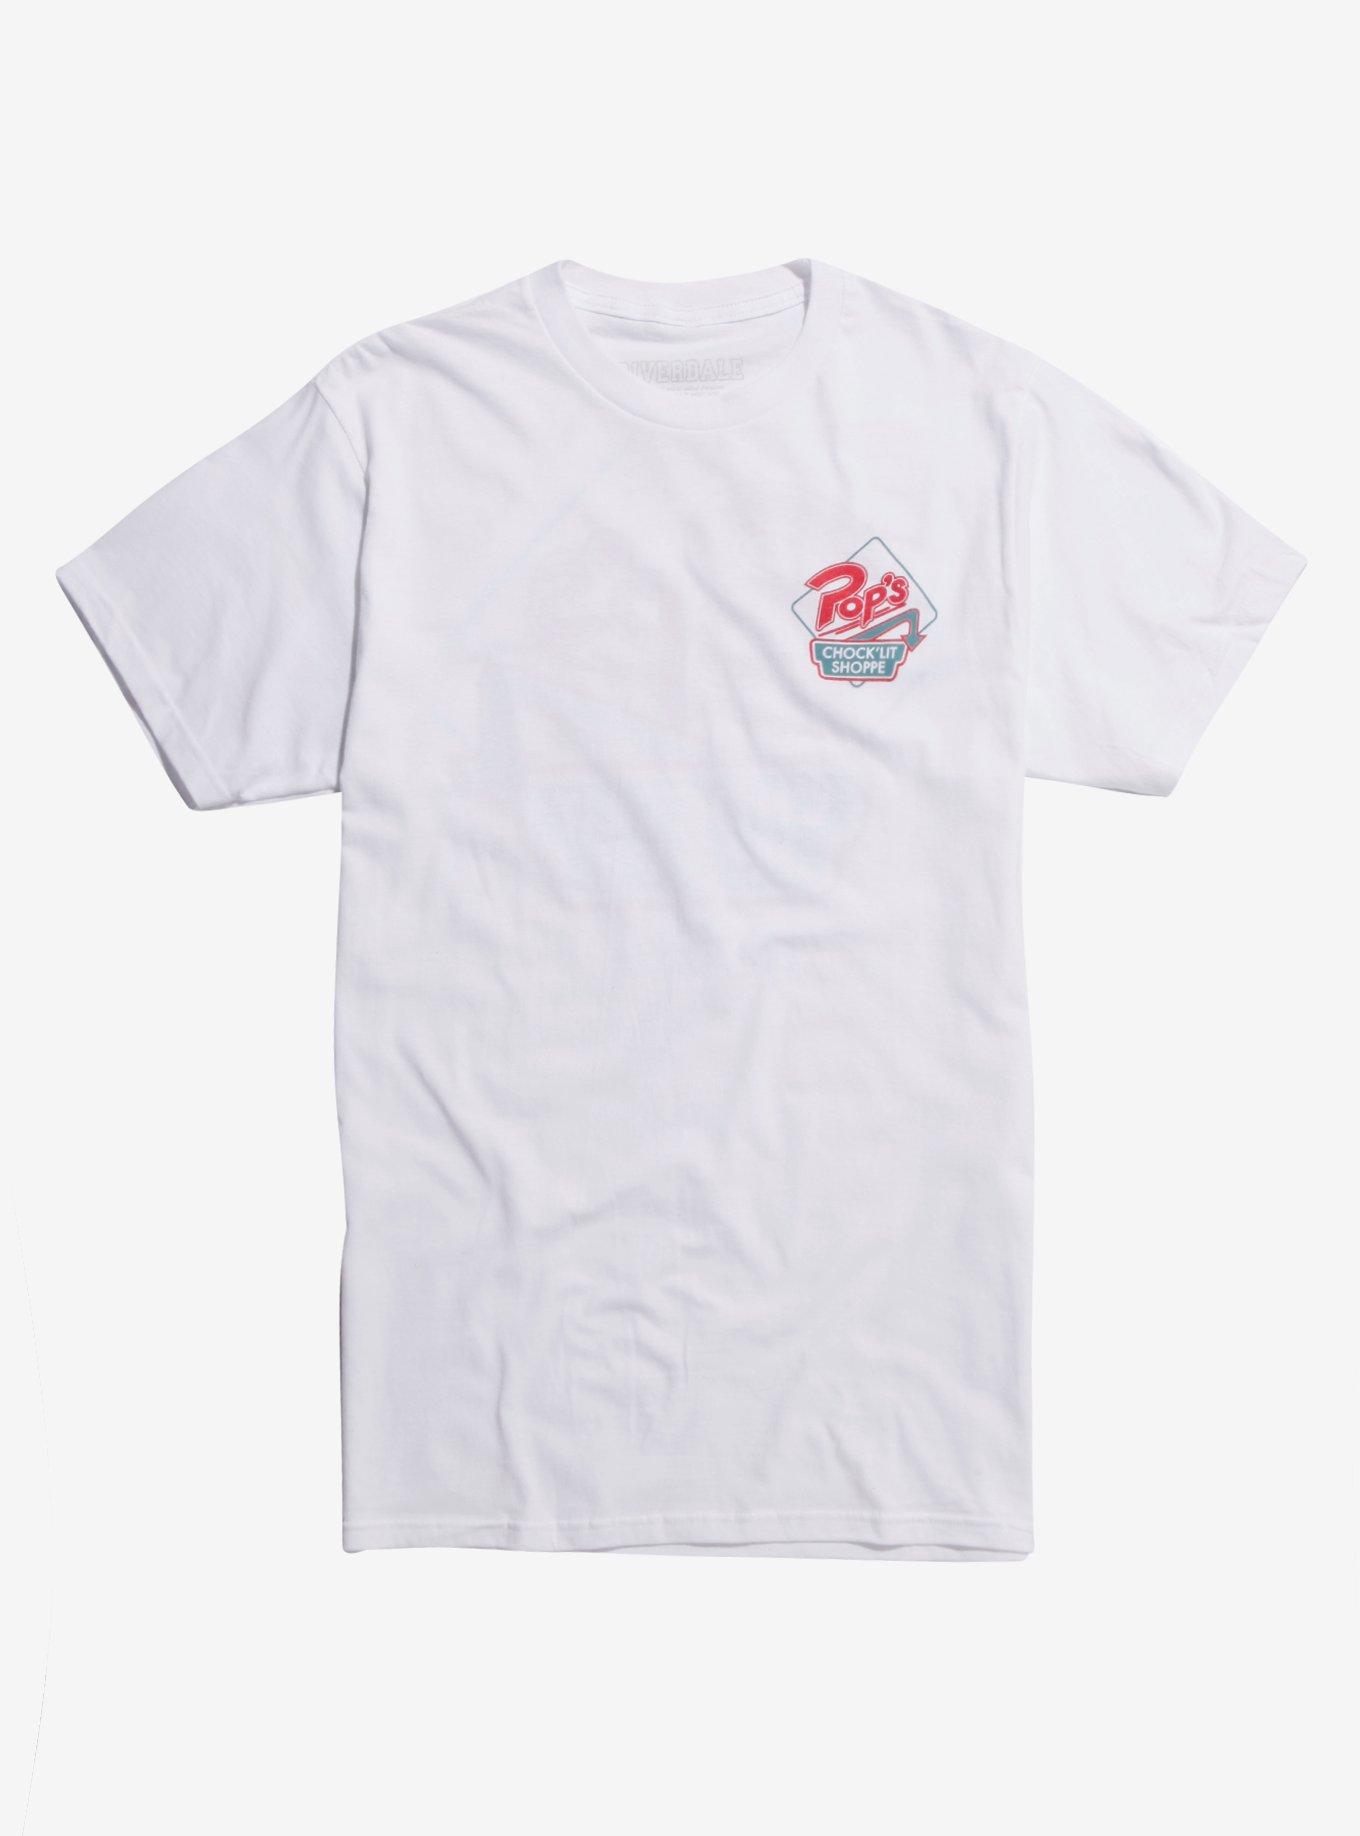 Riverdale Pop's Chock'Lit Shoppe T-Shirt, RED, hi-res